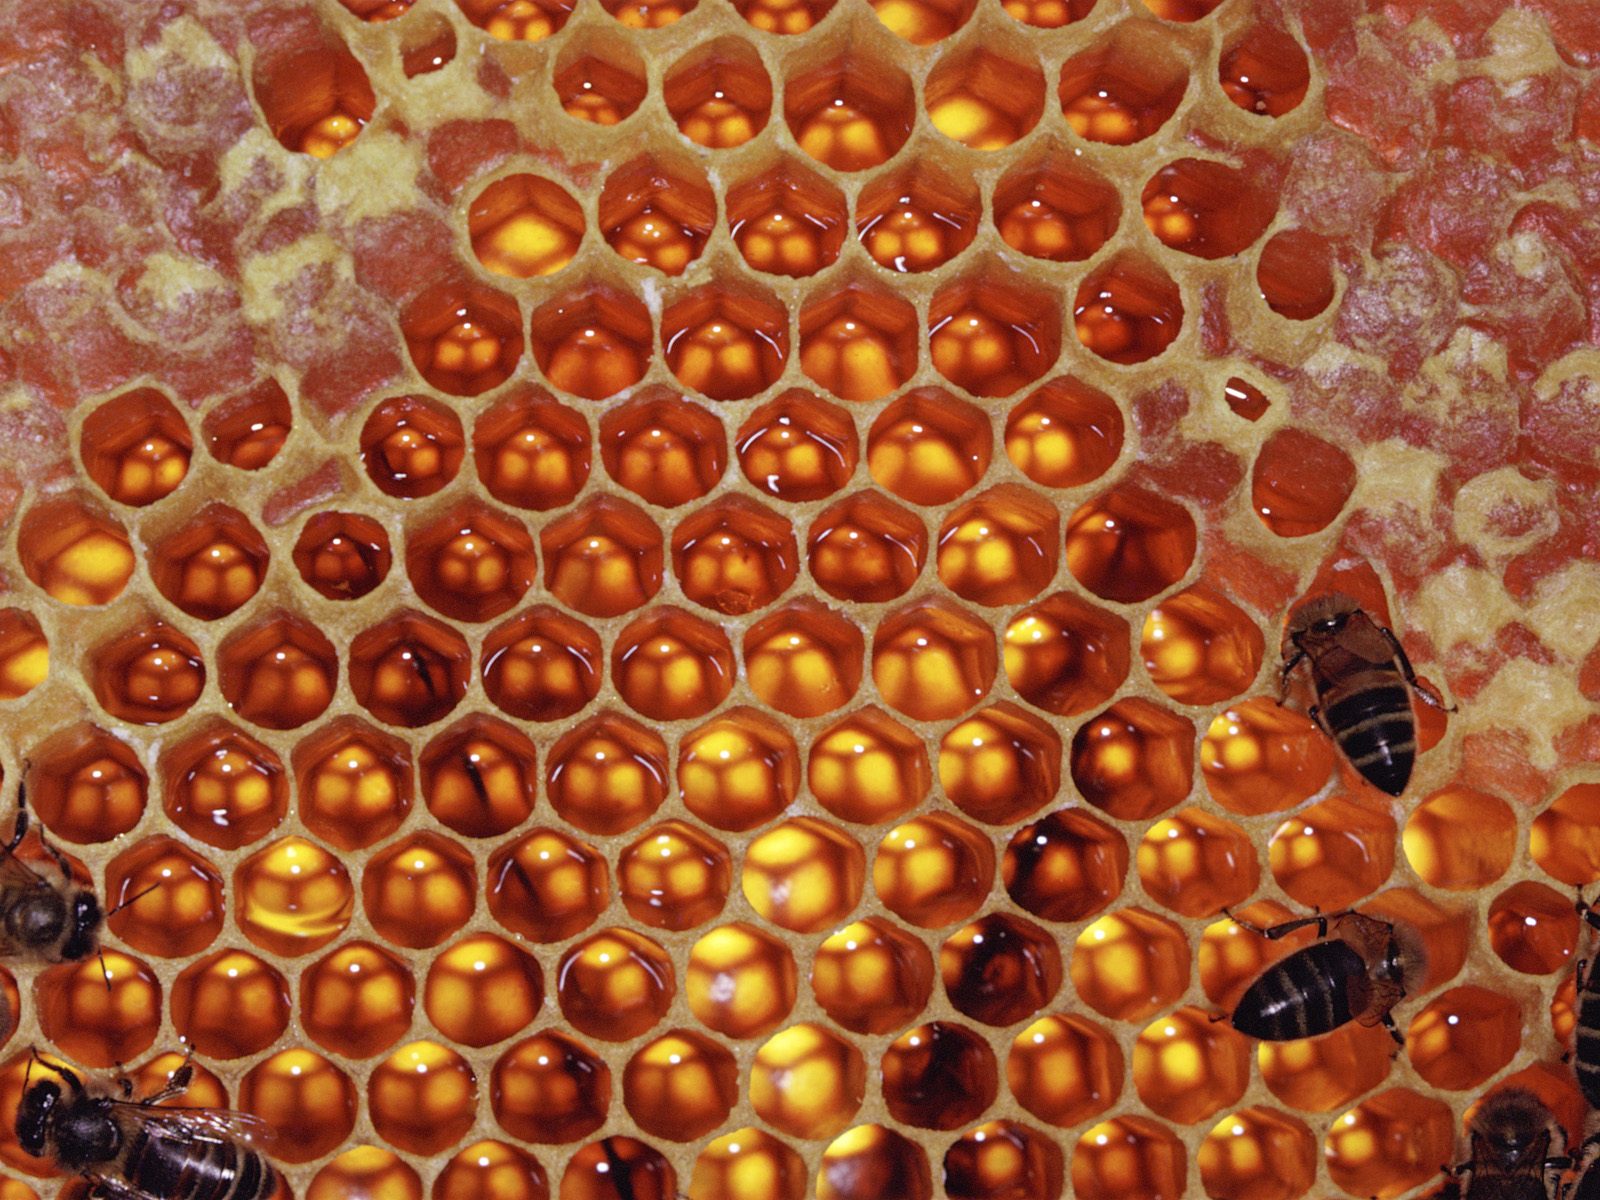 Honeycomb_1600x12001